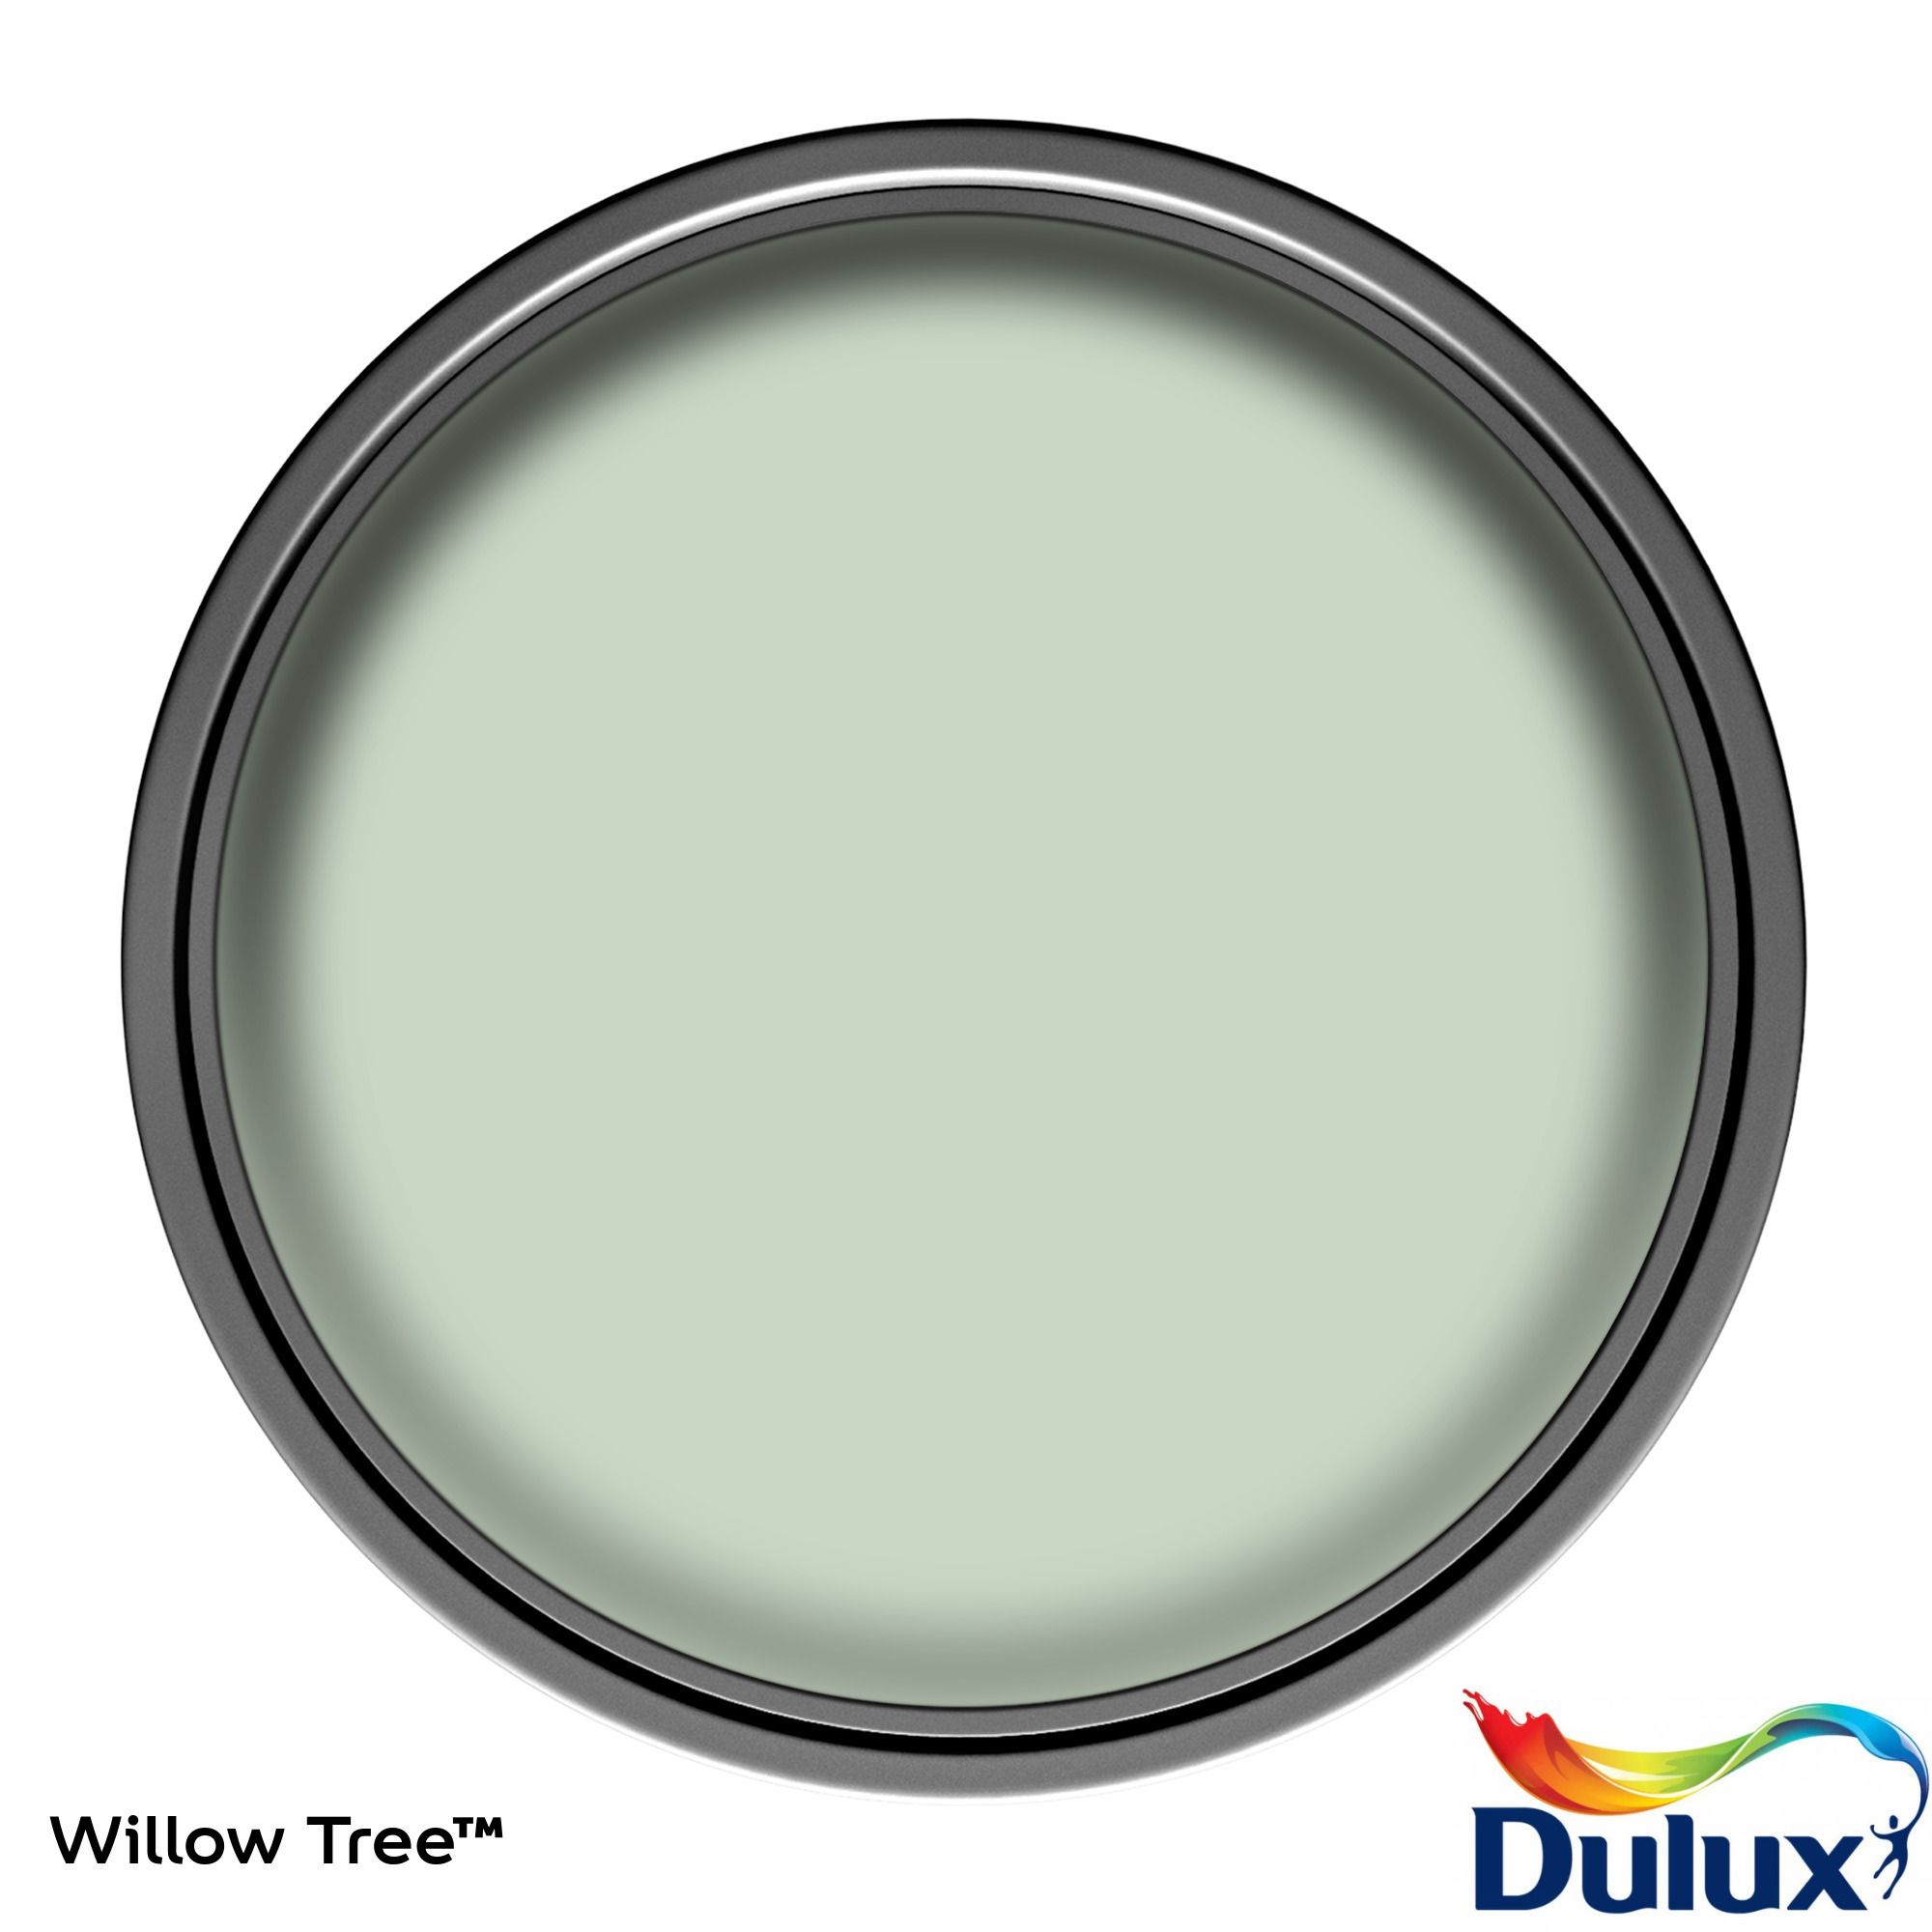 Dulux Easycare Willow Tree Matt Wall paint, 5L